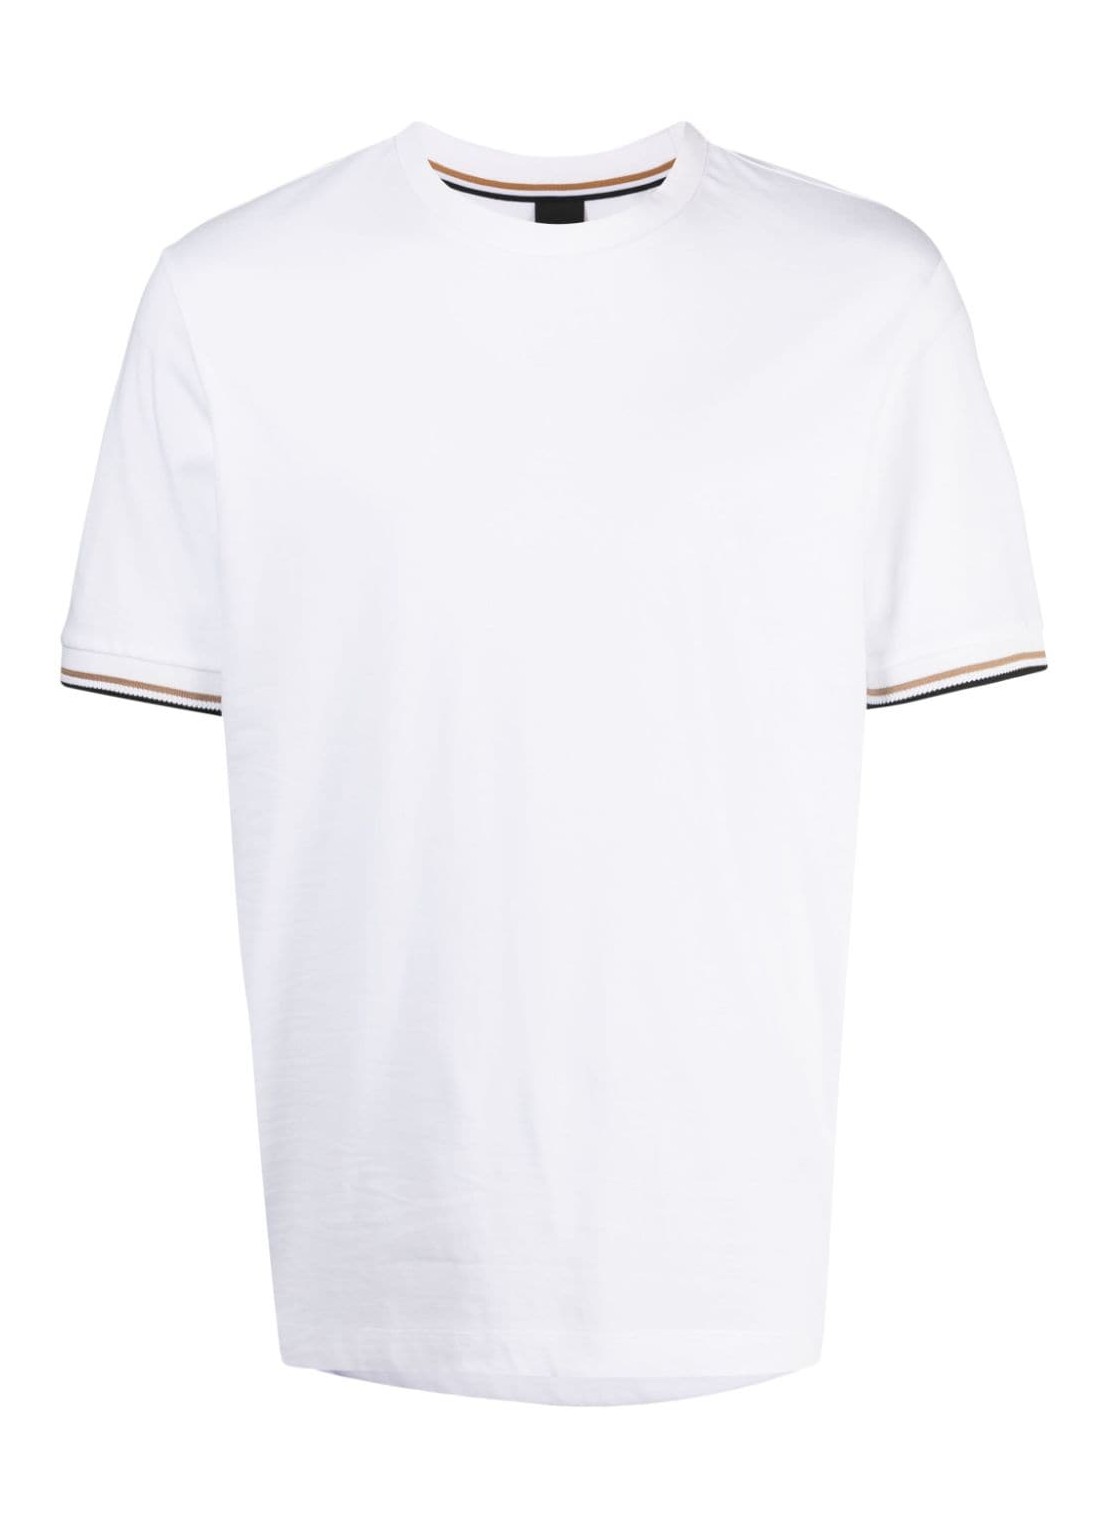 Camiseta boss t-shirt man thompson 04 50501097 100 talla XL
 